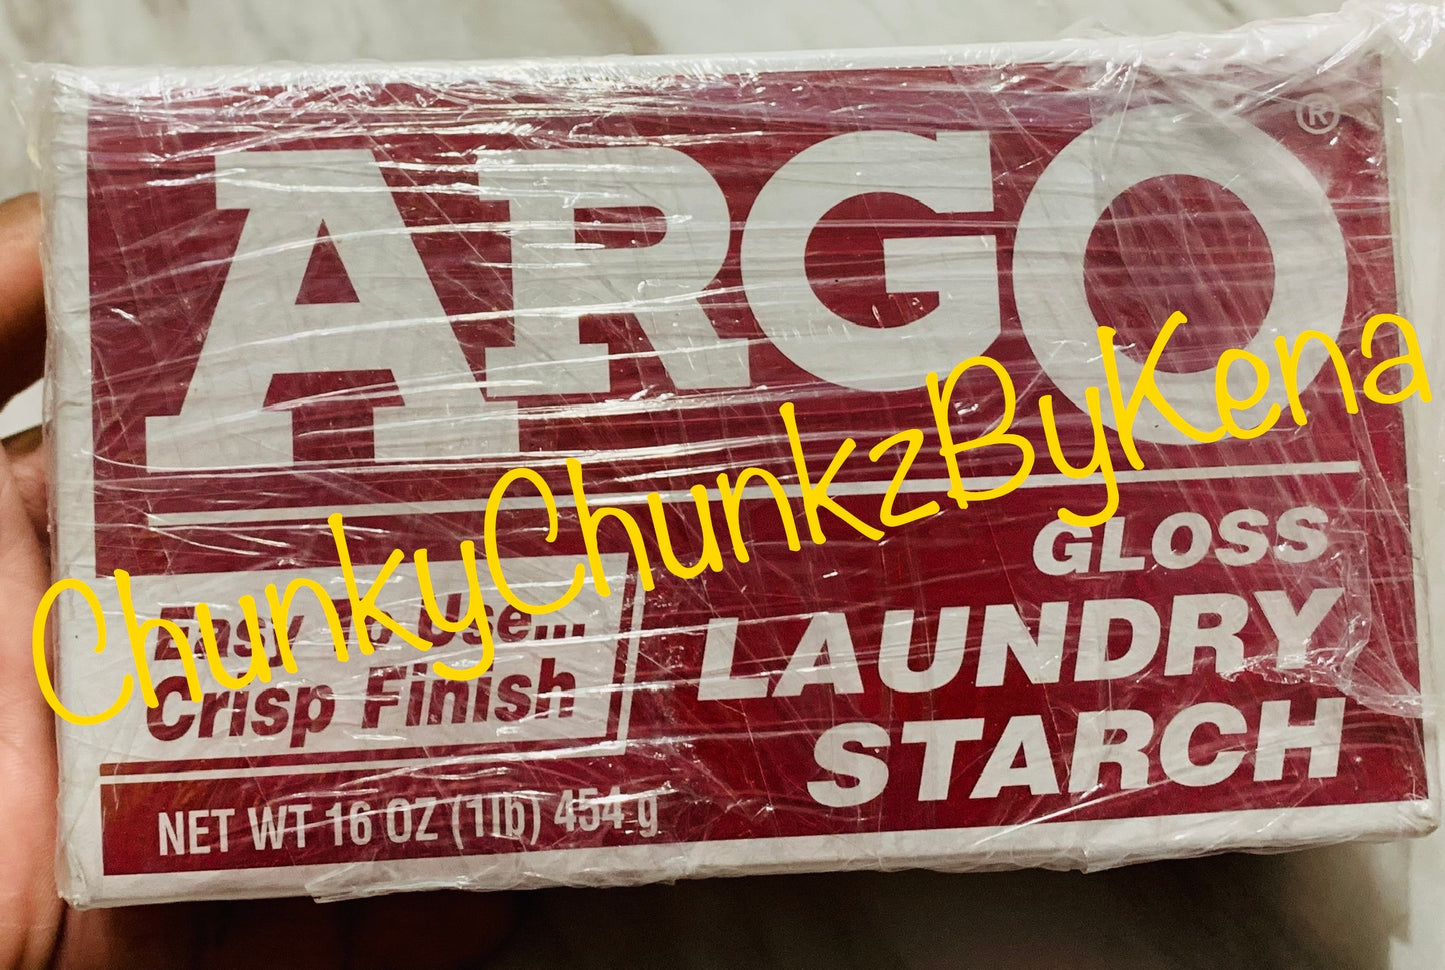 Argo Laundry Starch